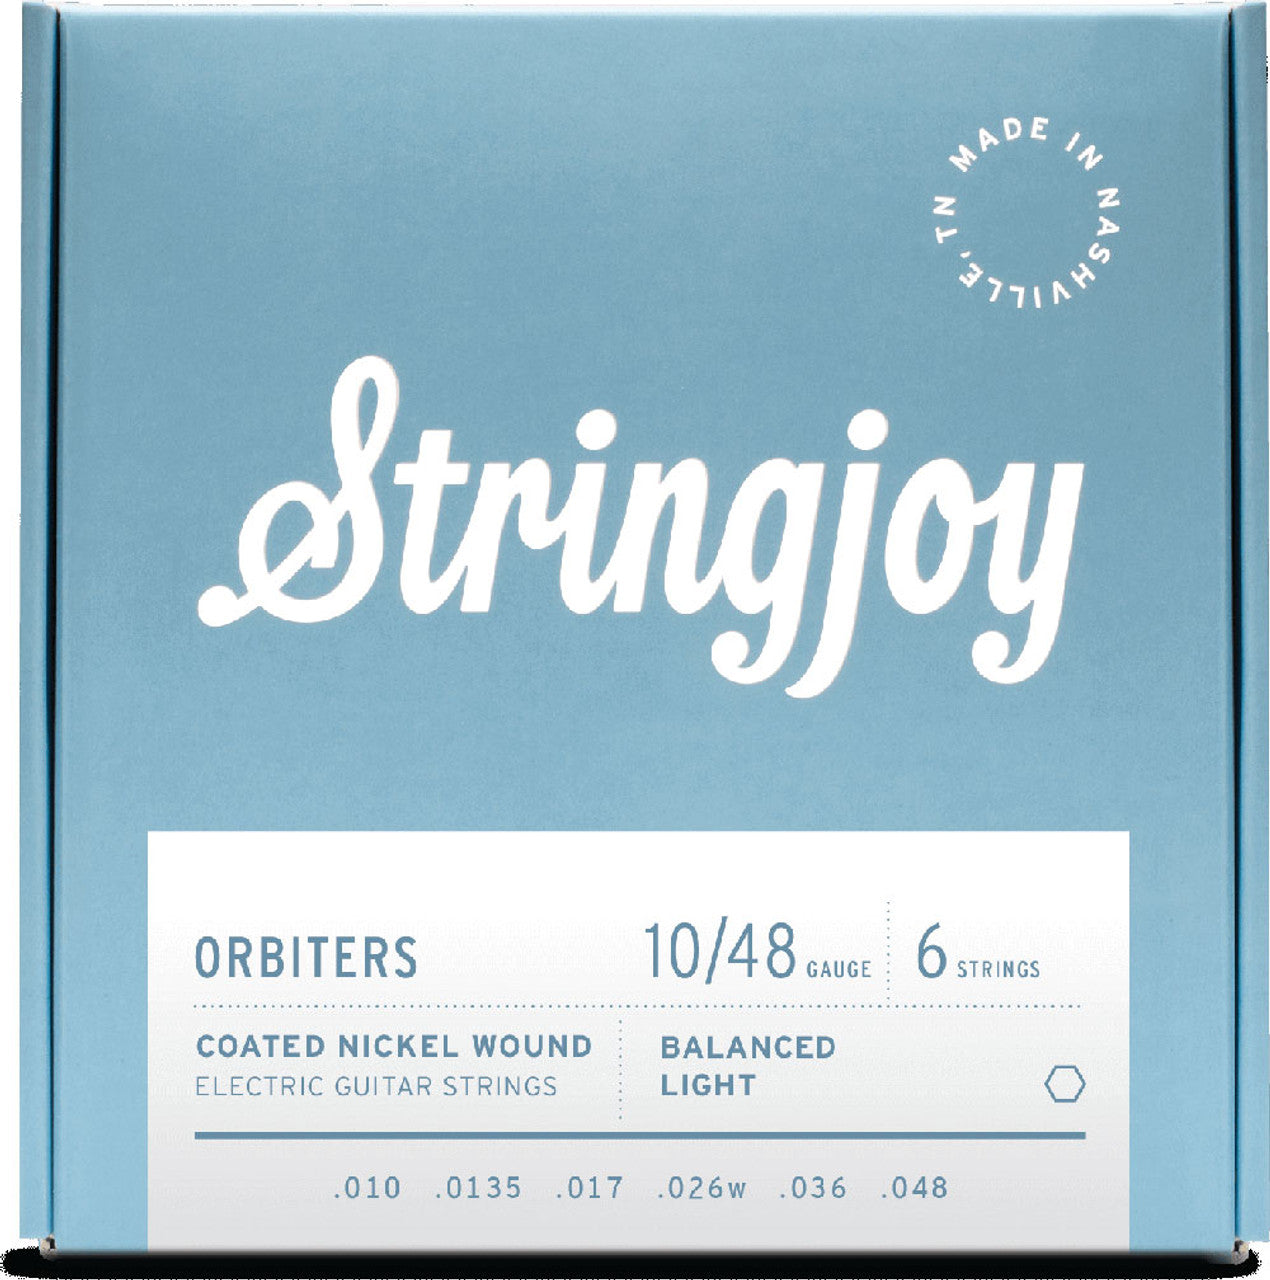 Stringjoy Orbiters Coated Nickel Wound Electric Guitar Strings Balanced Light 10-48